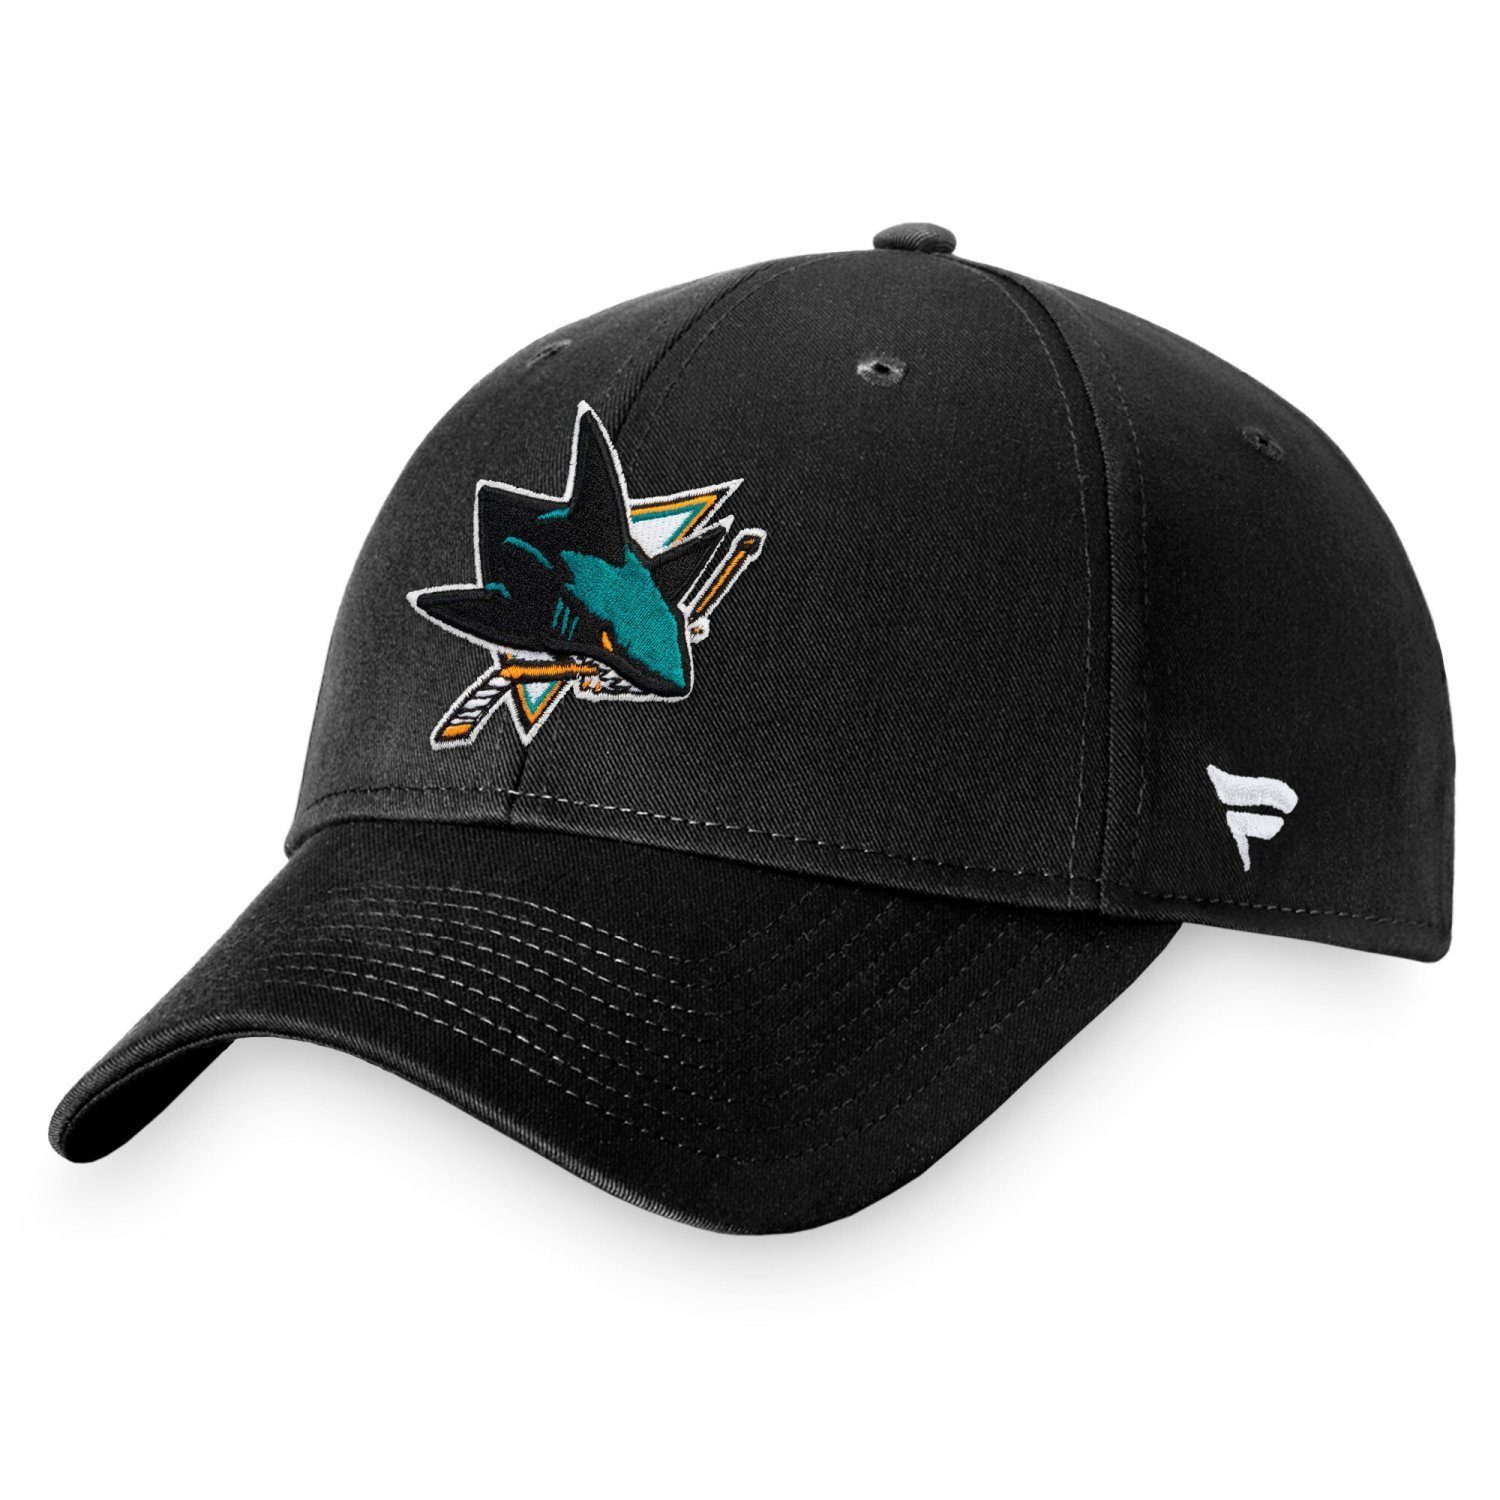 Herren Caps Fanatics Baseball Cap NHL LEAGUE San Jose Sharks